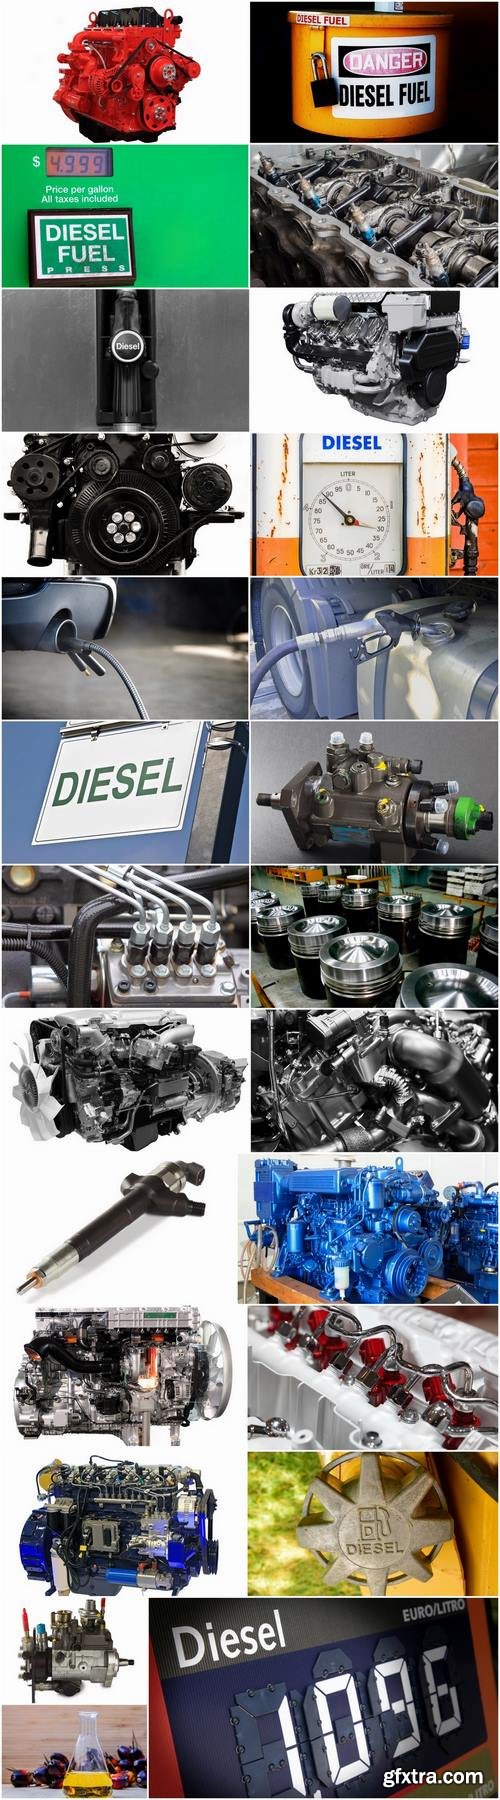 Diesel engine diesel equipment components 25 HQ Jpeg